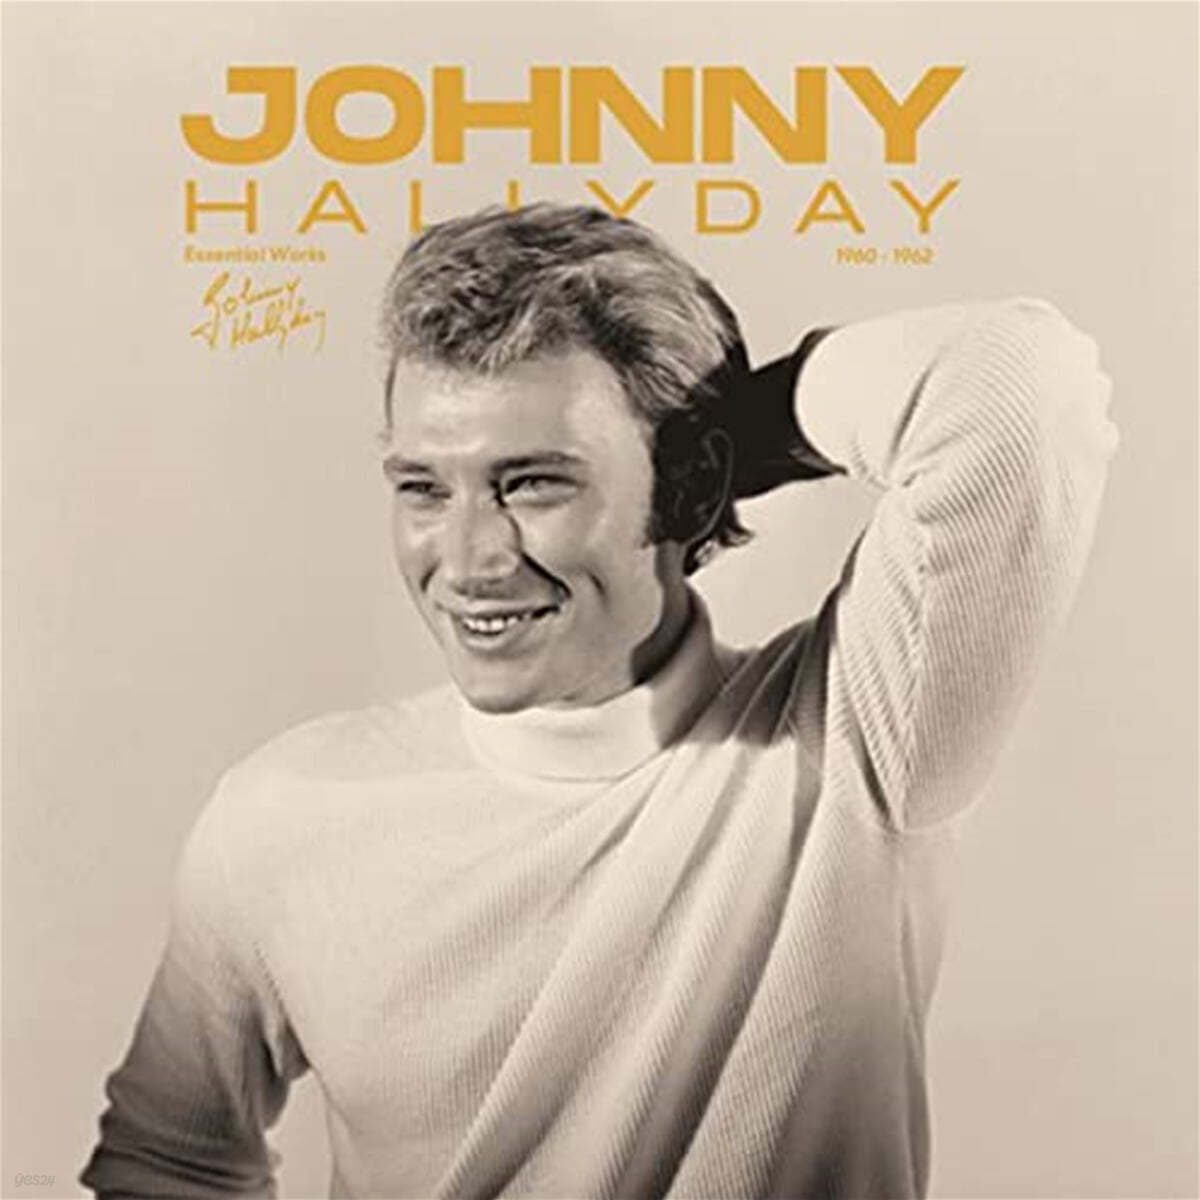 Johnny Hallyday (조니 할리데이) - Essential Works 1960-1962 [투명 컬러 2LP] 